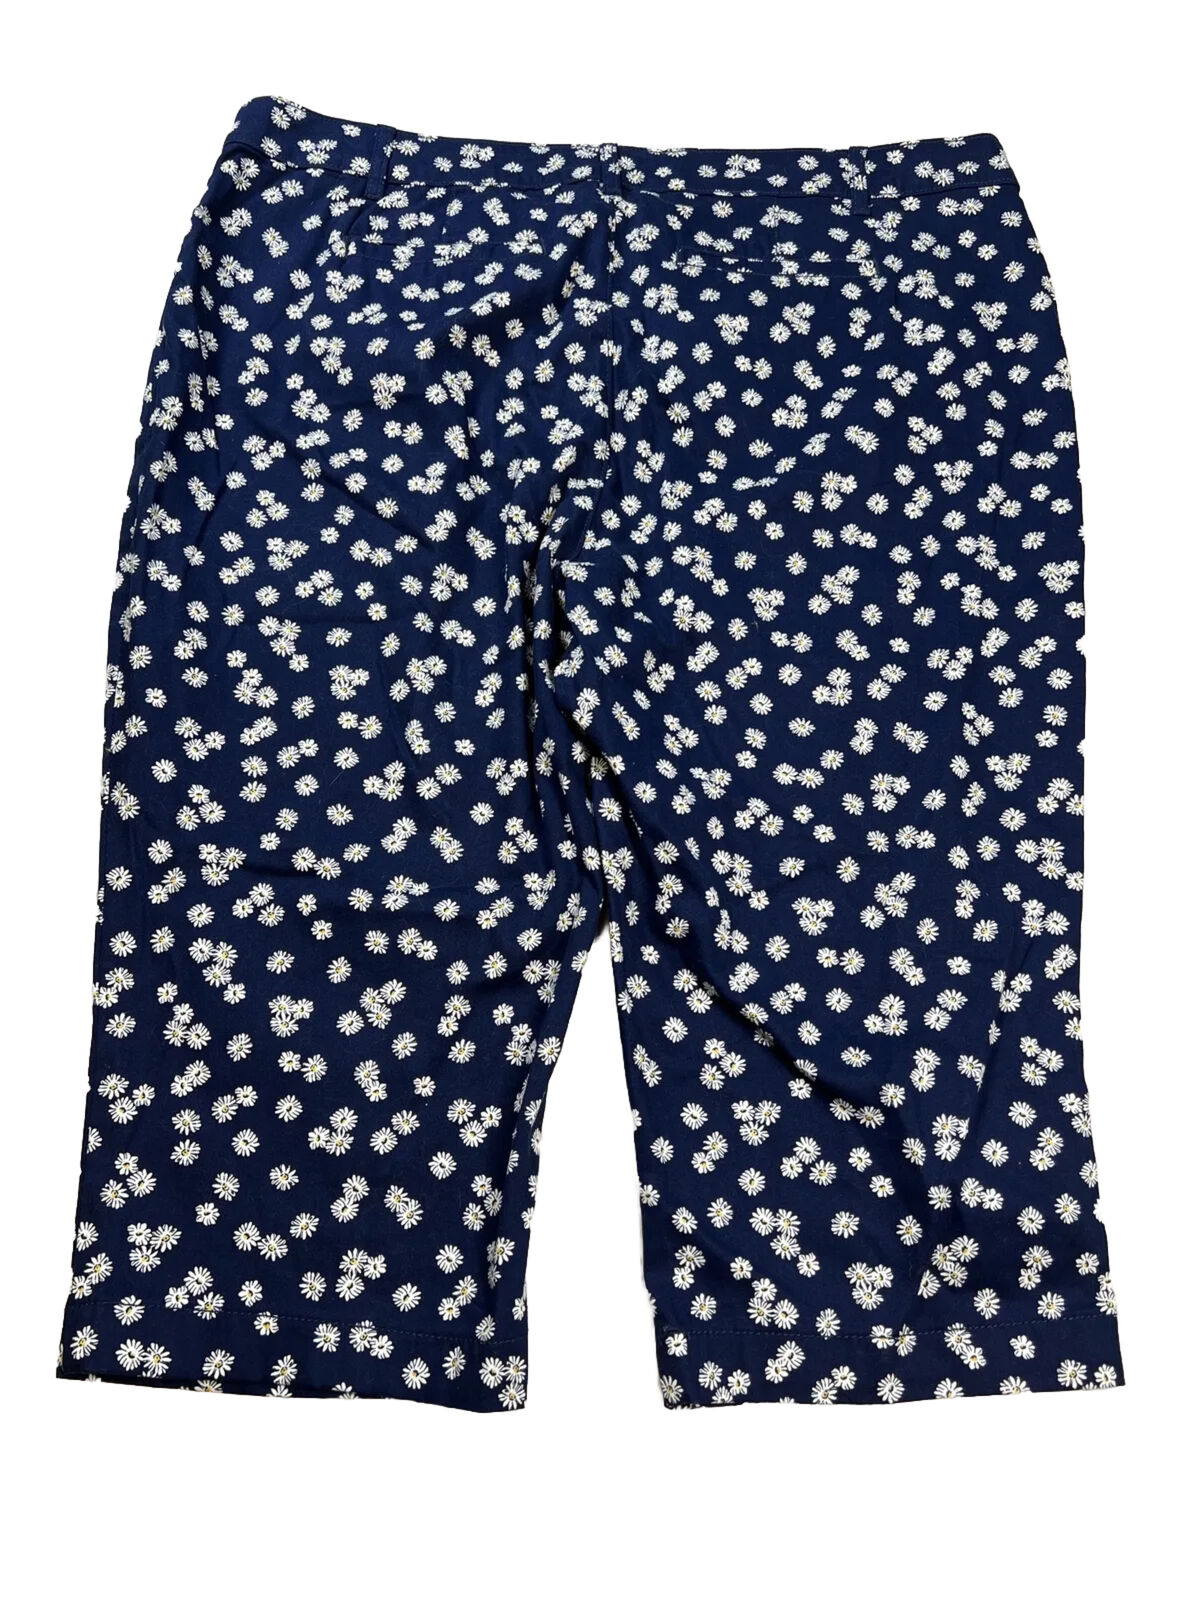 NUEVO Pantalón capri Daisy azul marino de St Johns Bay para mujer - Plus 20W